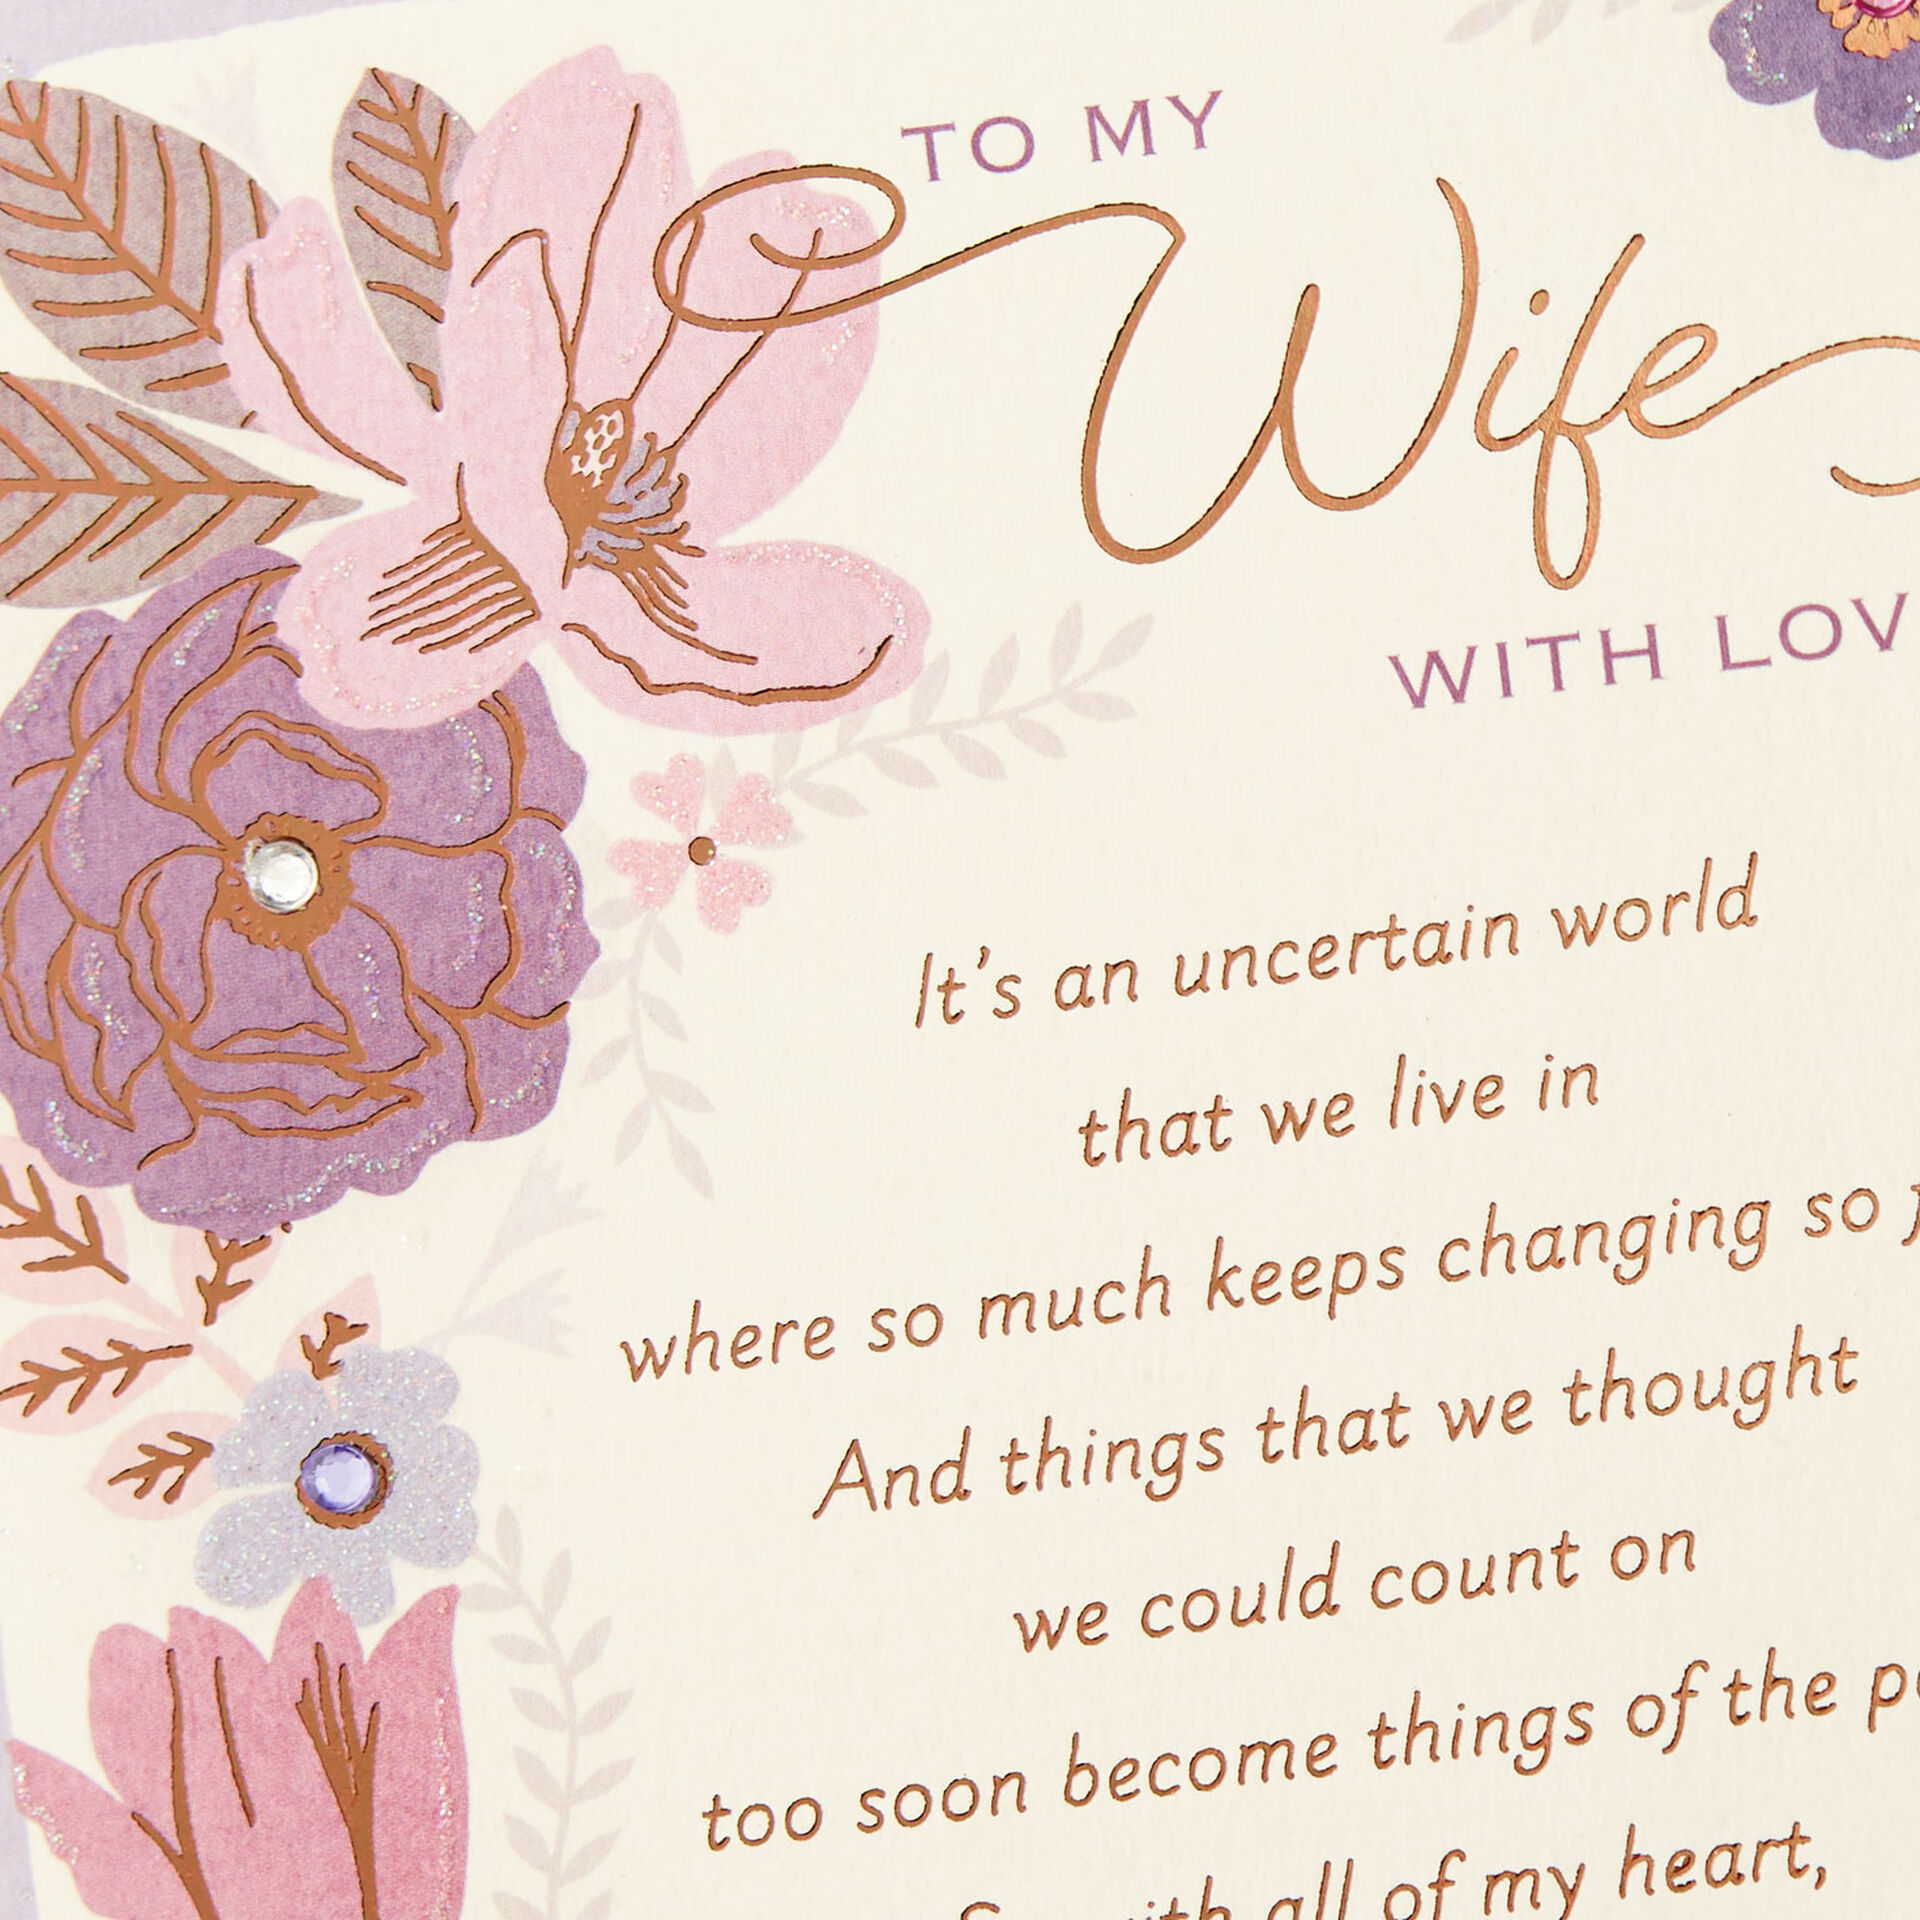 My Wonderful Beautiful Wife Poetic Anniversary Card Greeting Cards